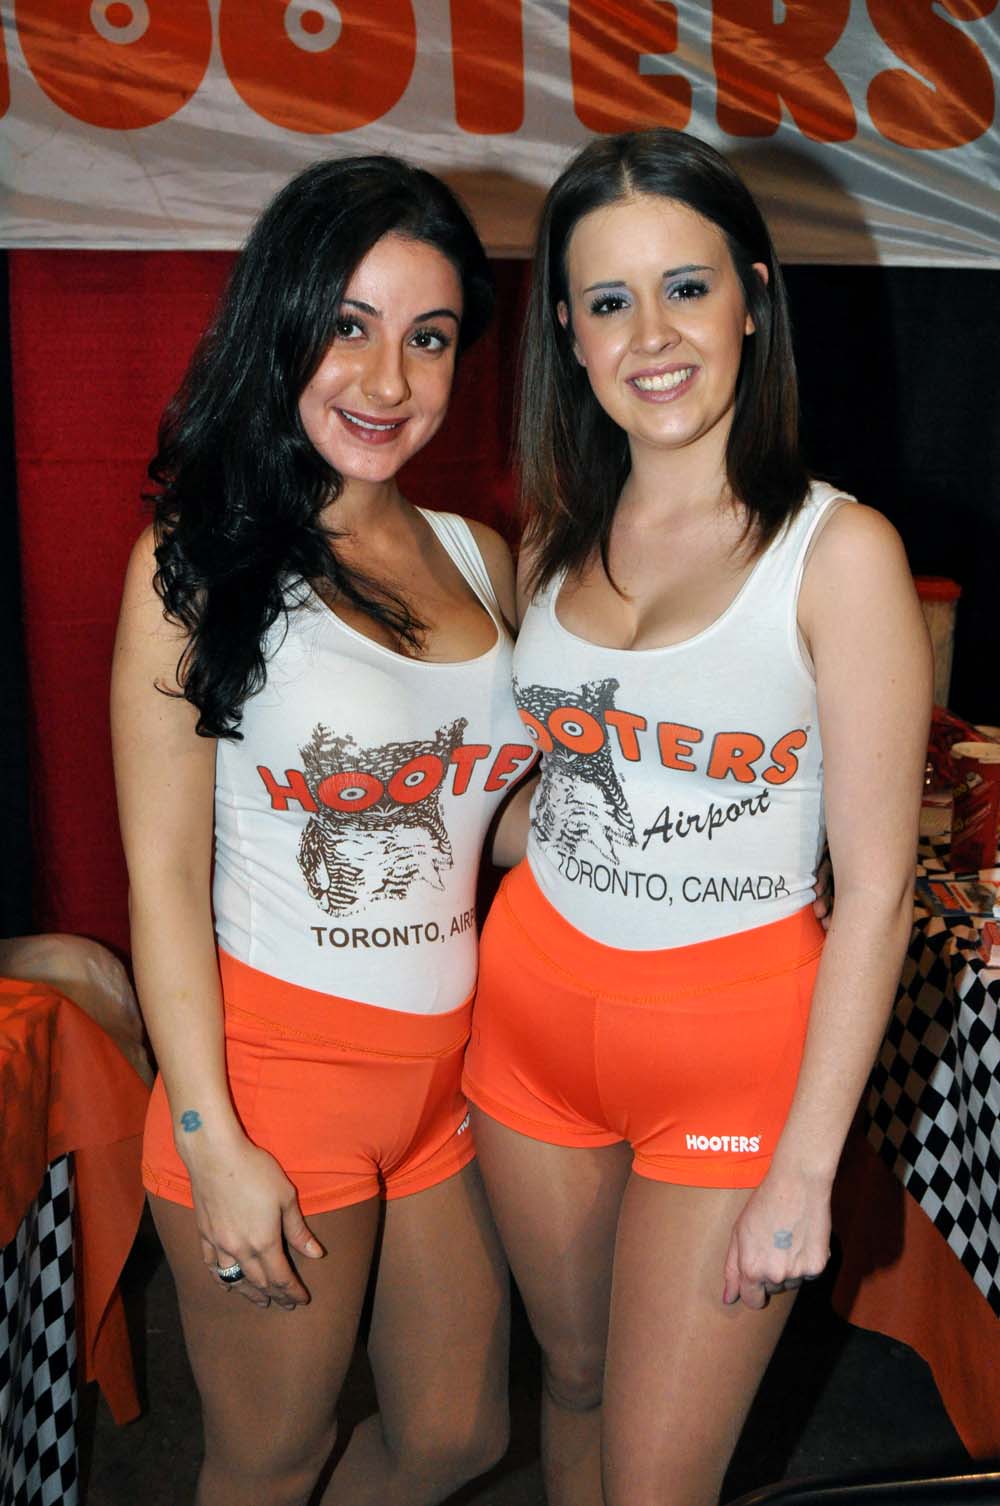 Hooters girls in full orange short uniform.